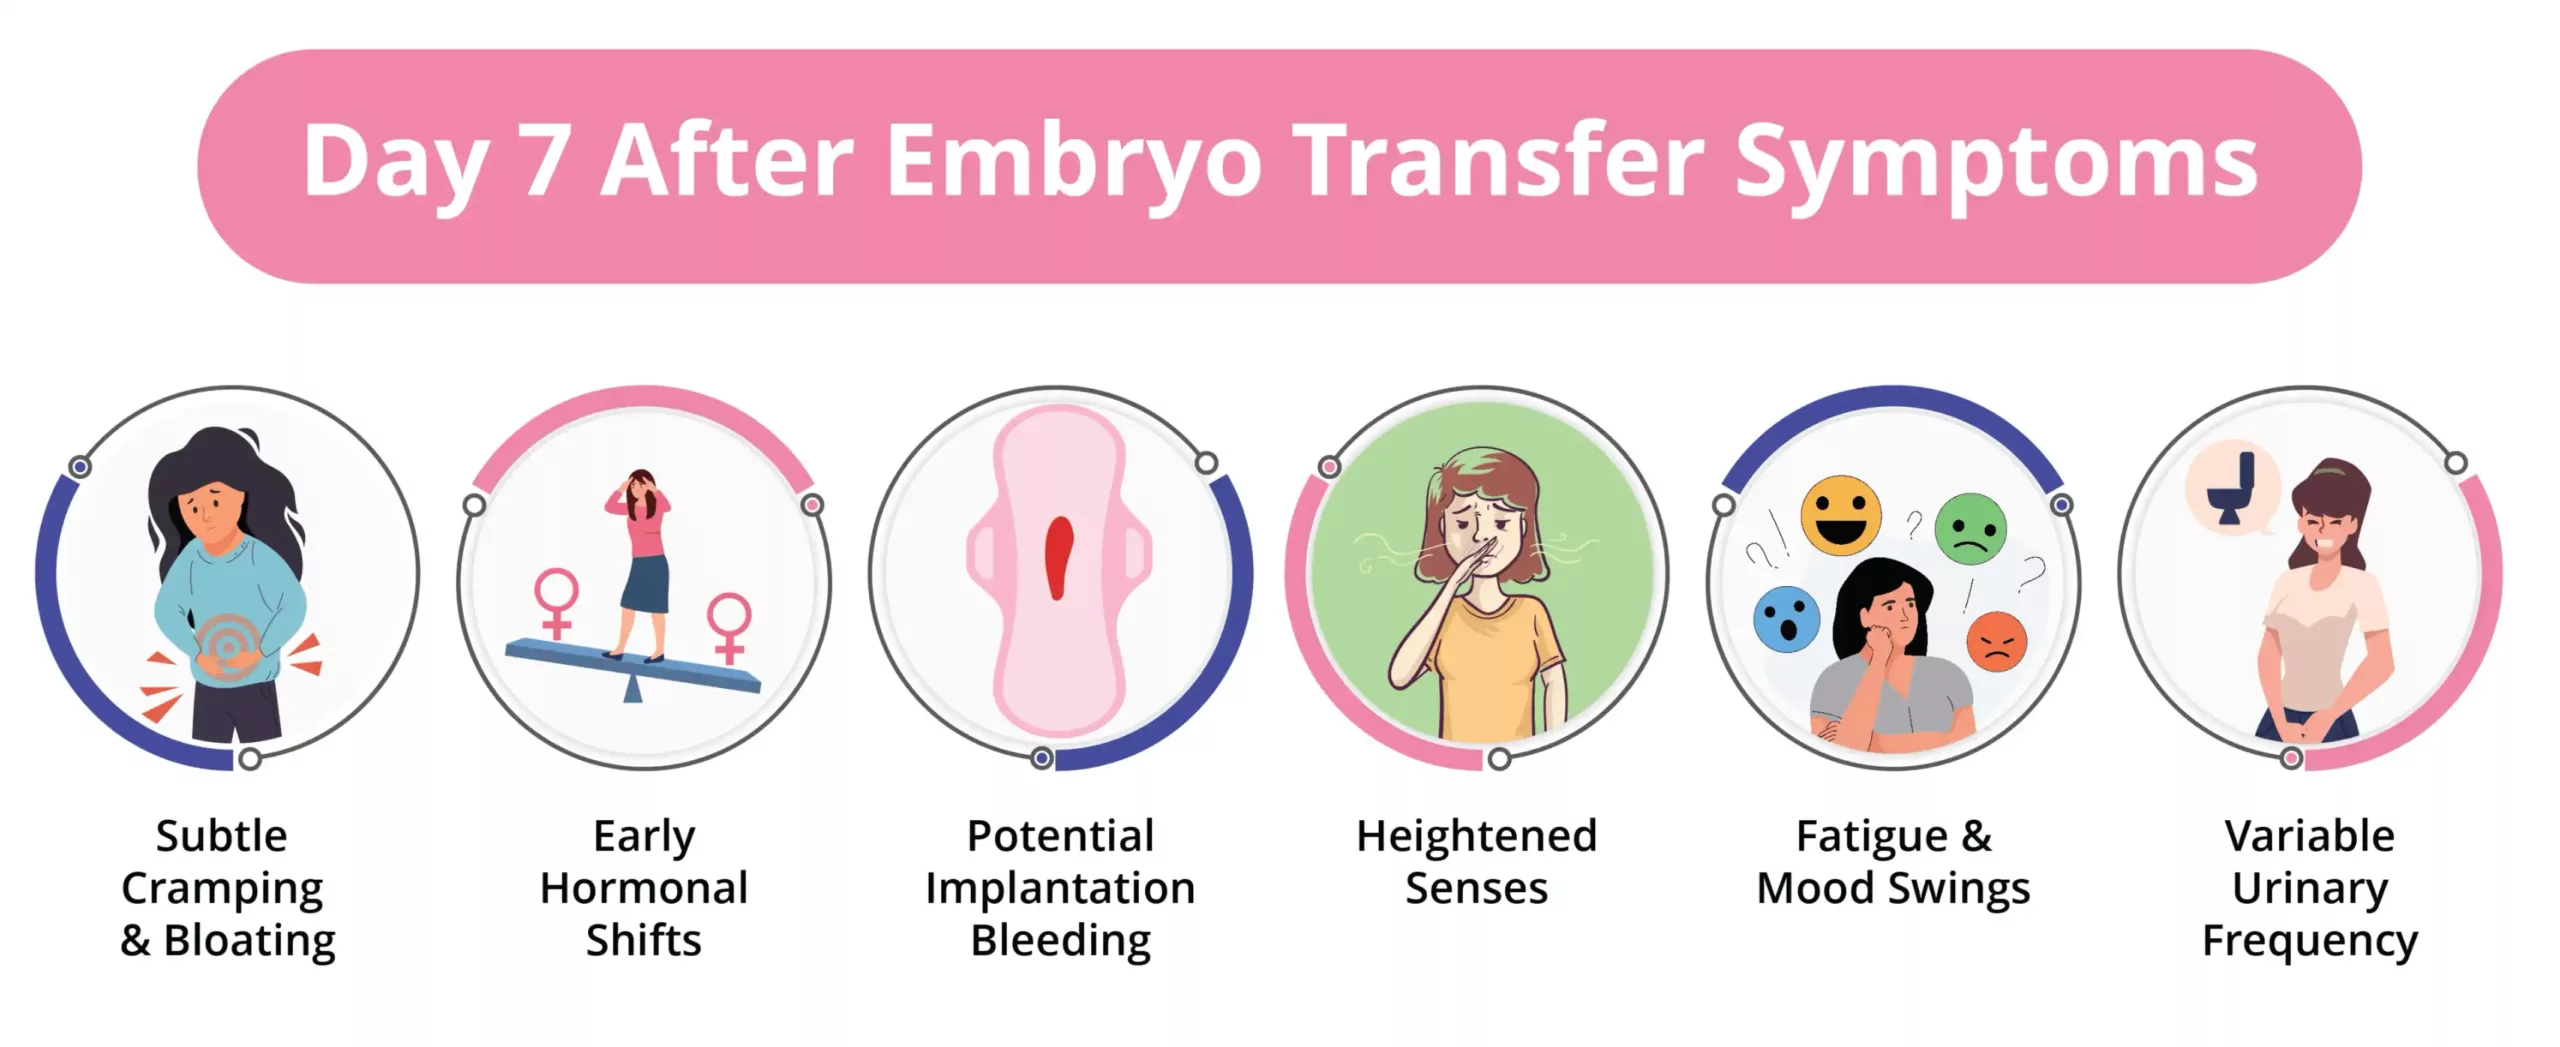 Day 7 After Embryo Transfer Symptoms